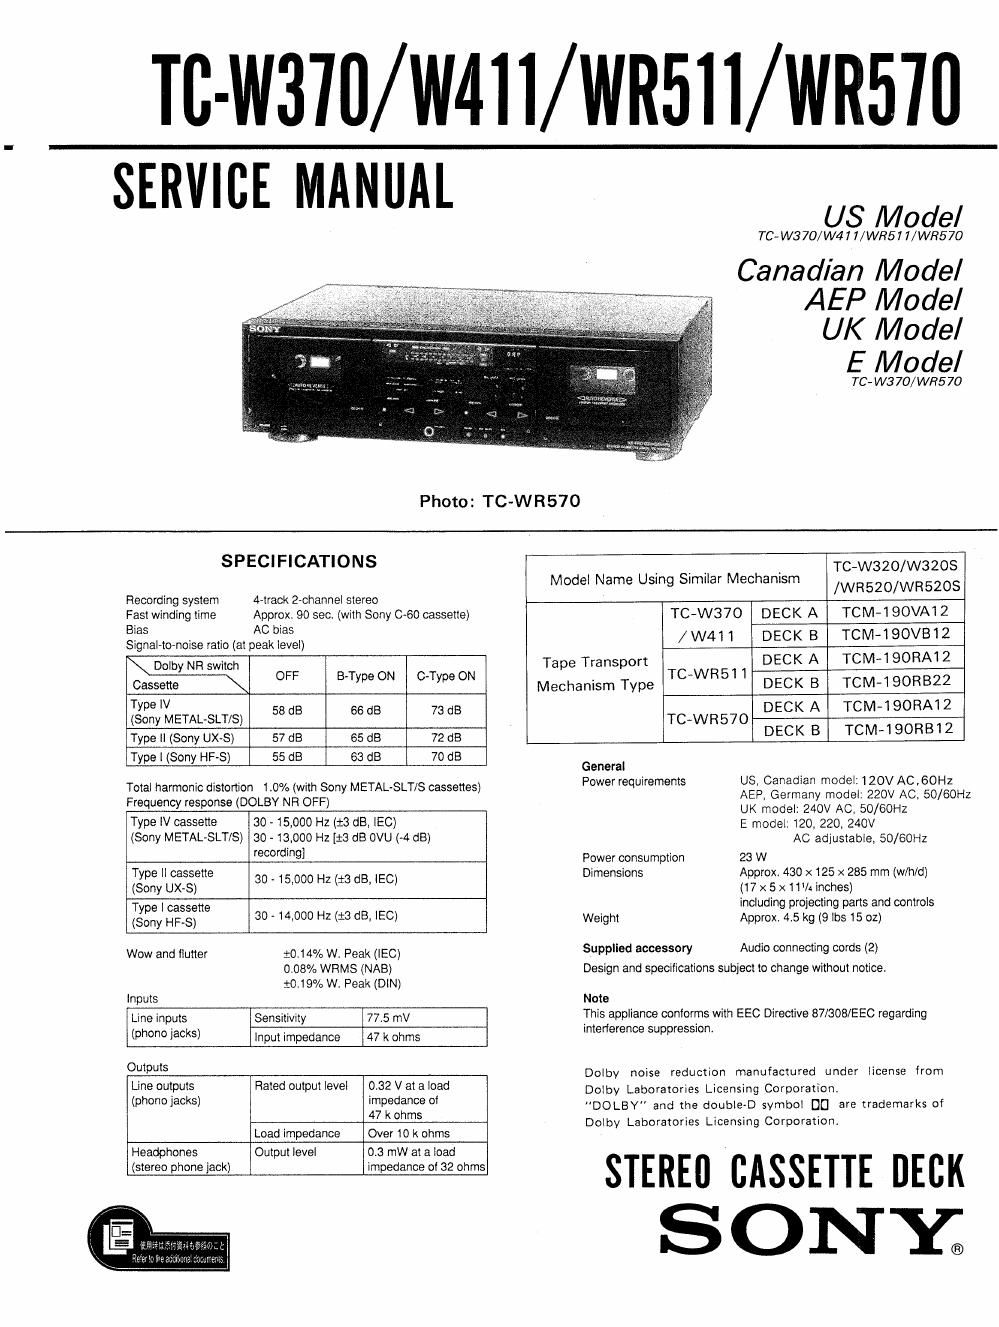 sony tc wr 511 service manual